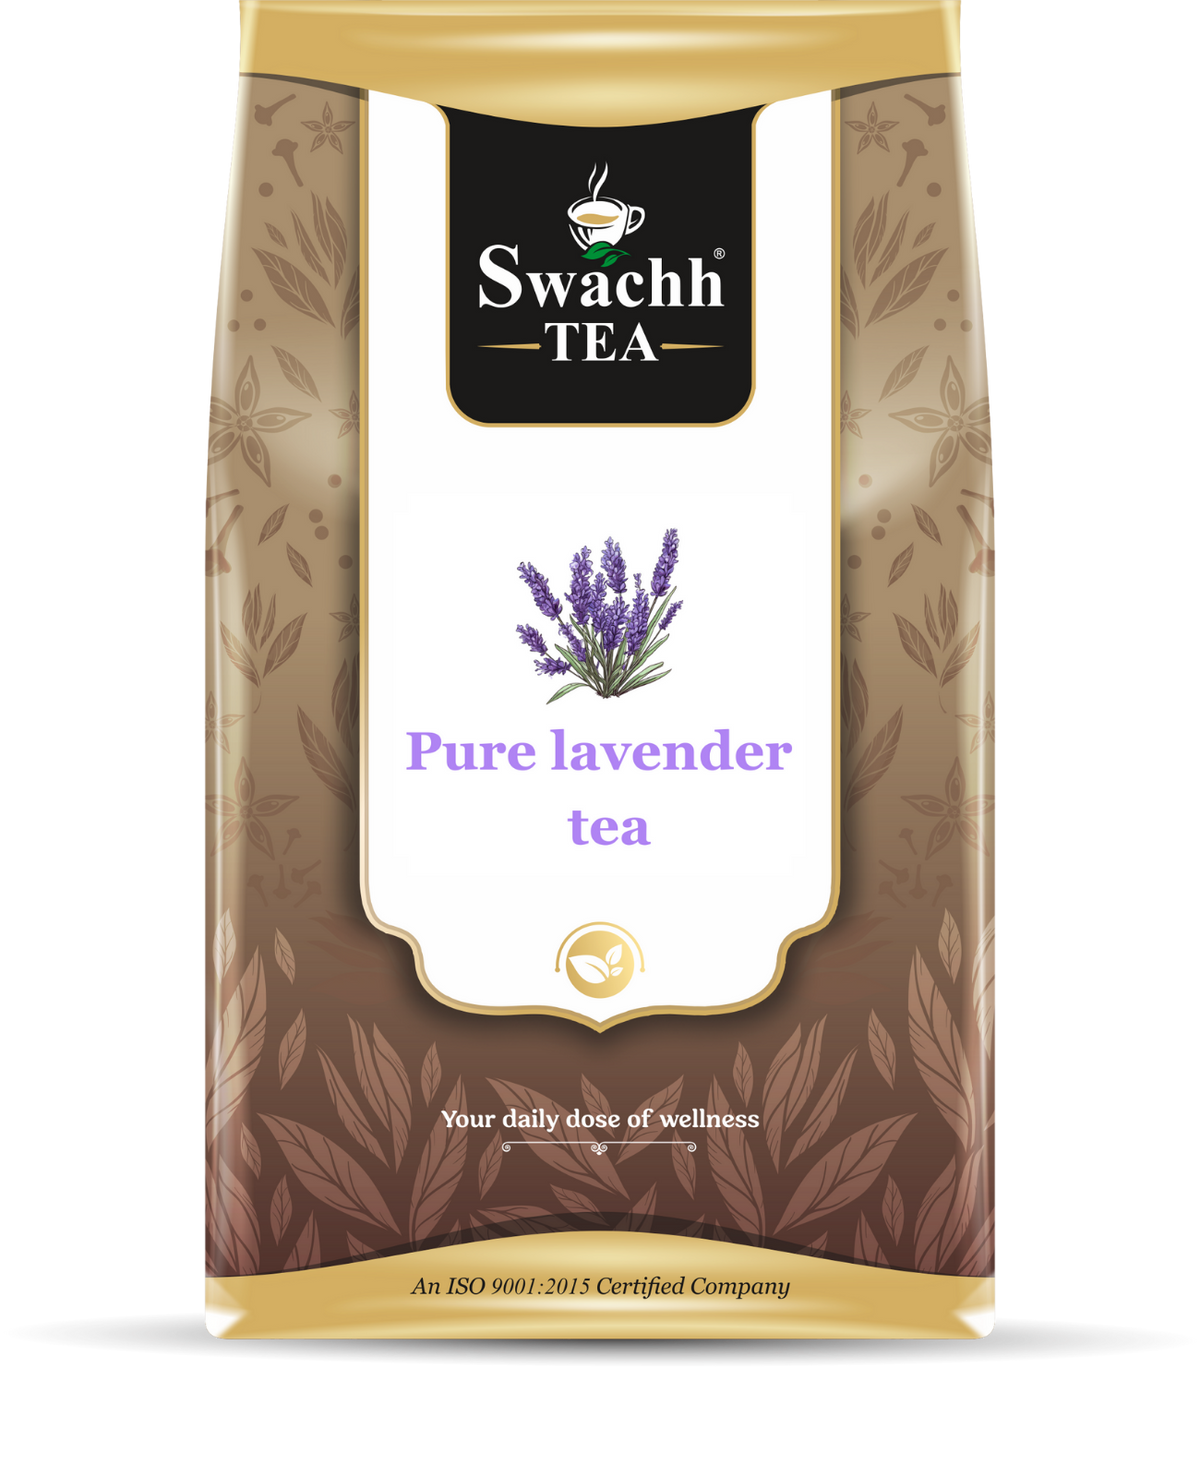 Pure lavender tea